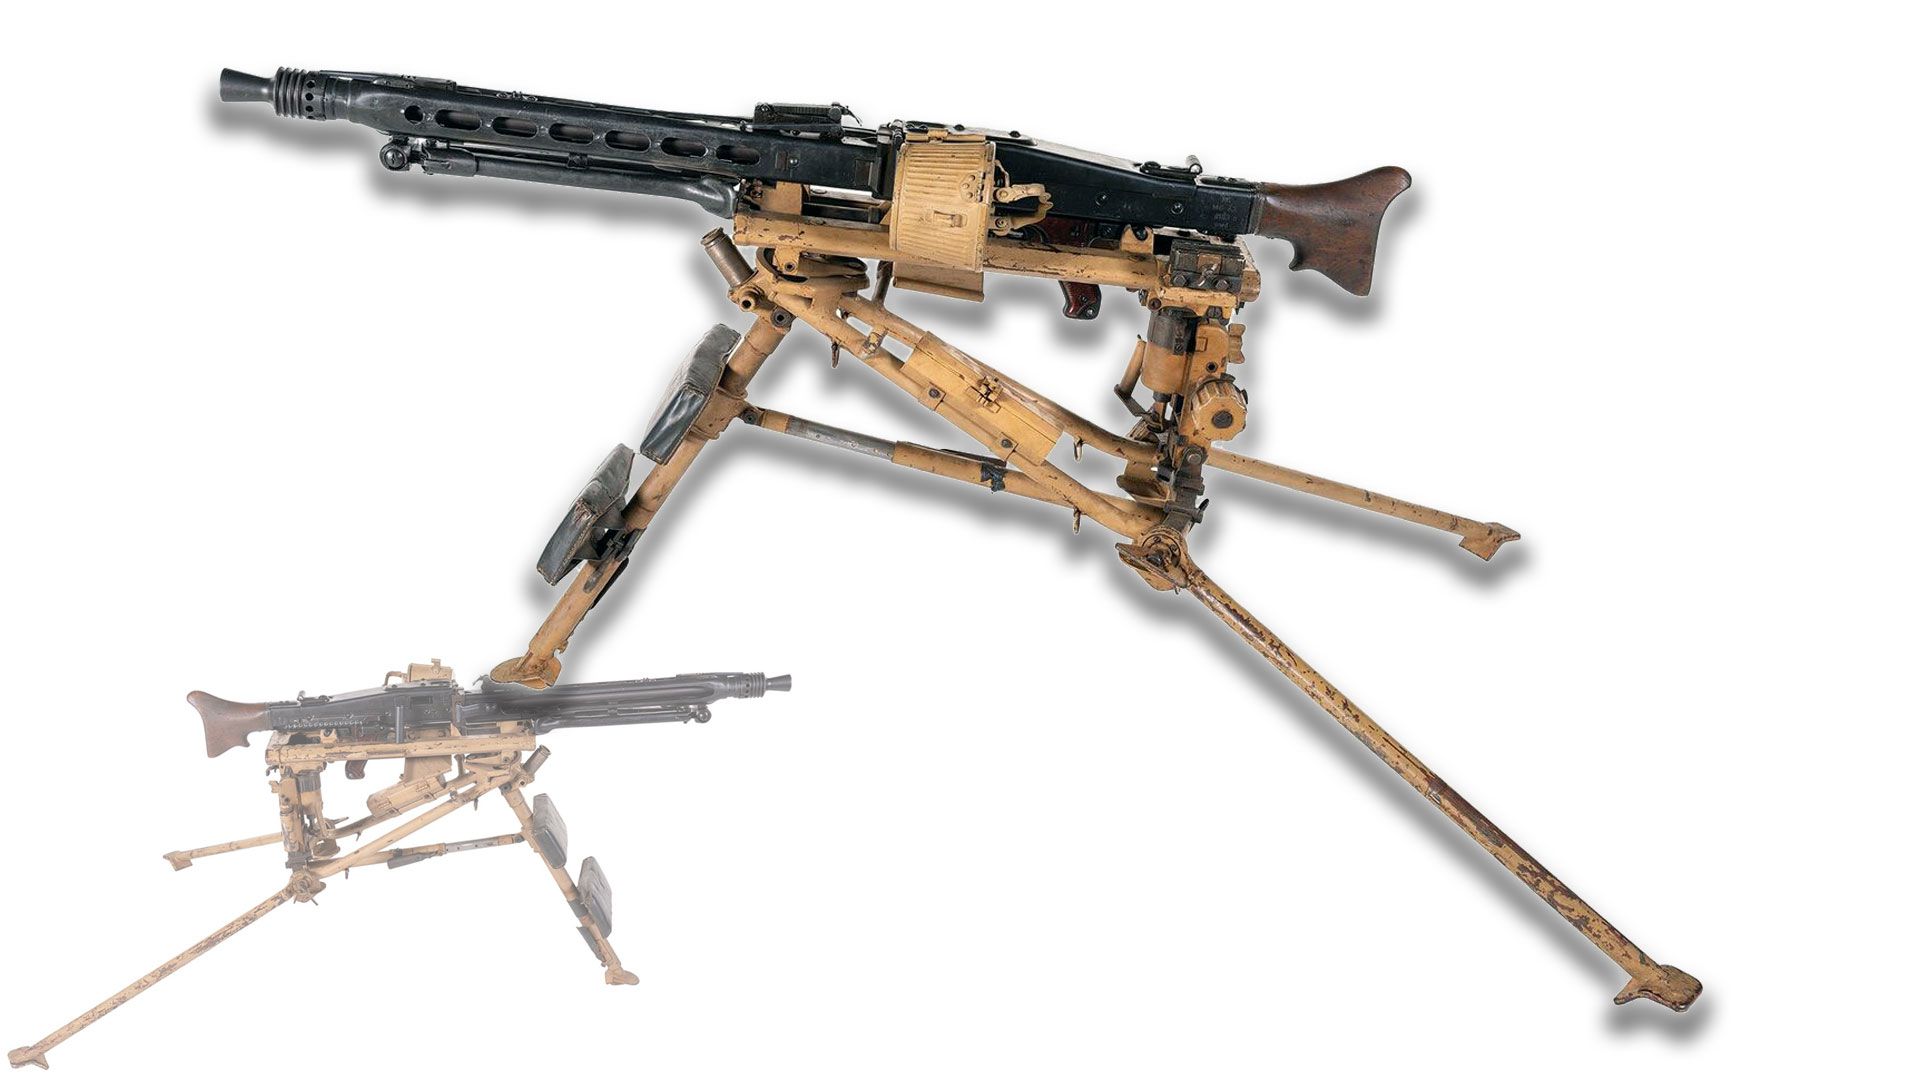 SUBMACHINE GUN MG-42 RIFLE MILITARY GUN ROTATING BULLETS VIBRATION ASSAULT TOY 